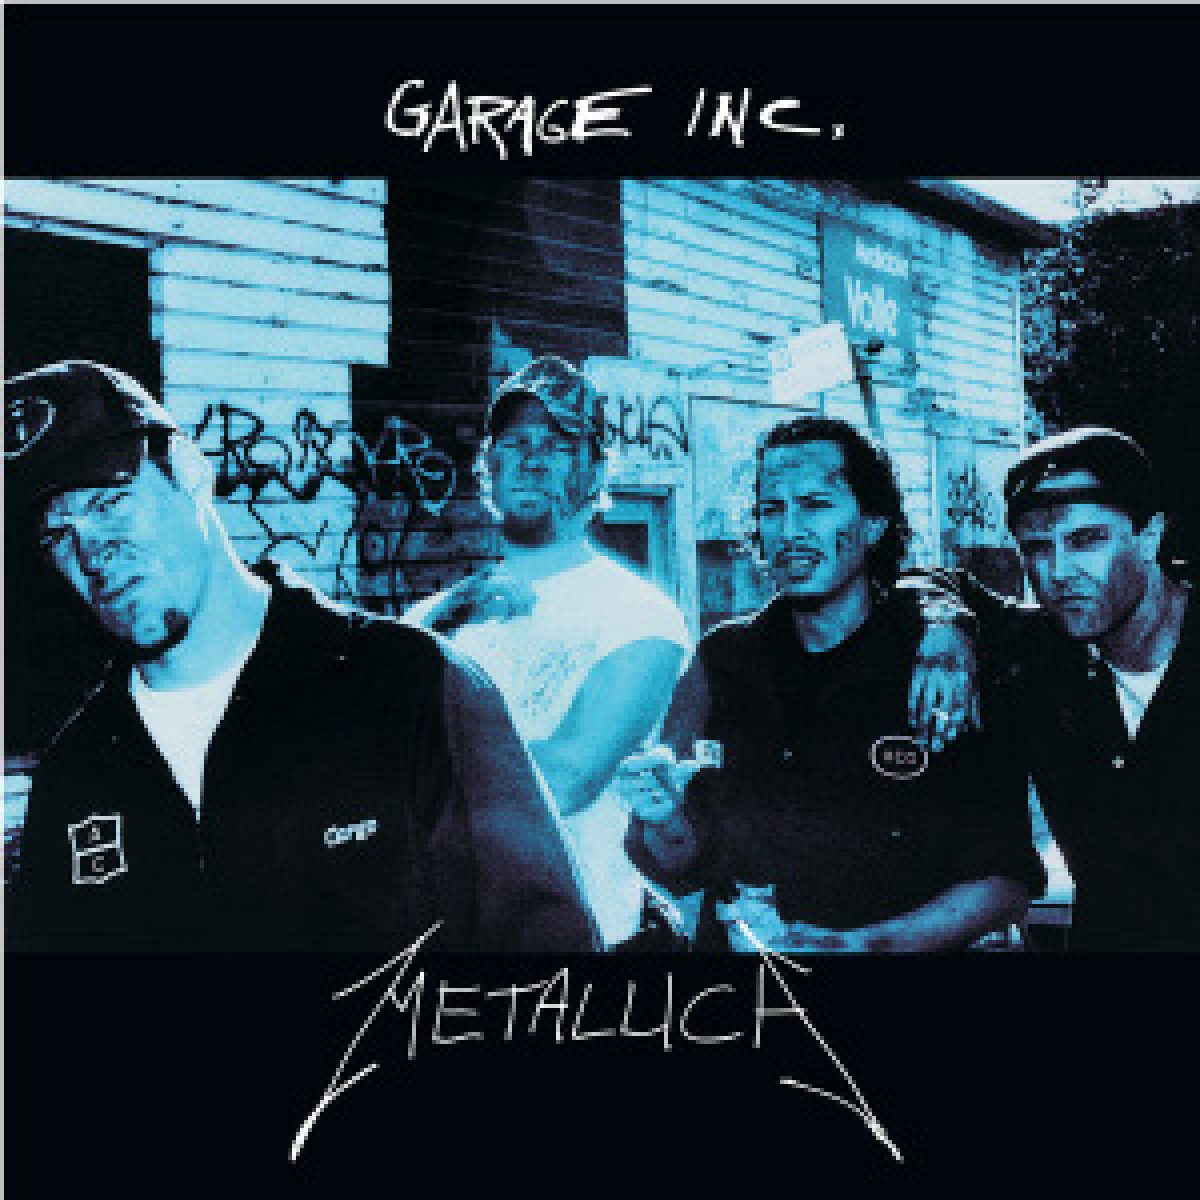 Metallica, Garage Inc.